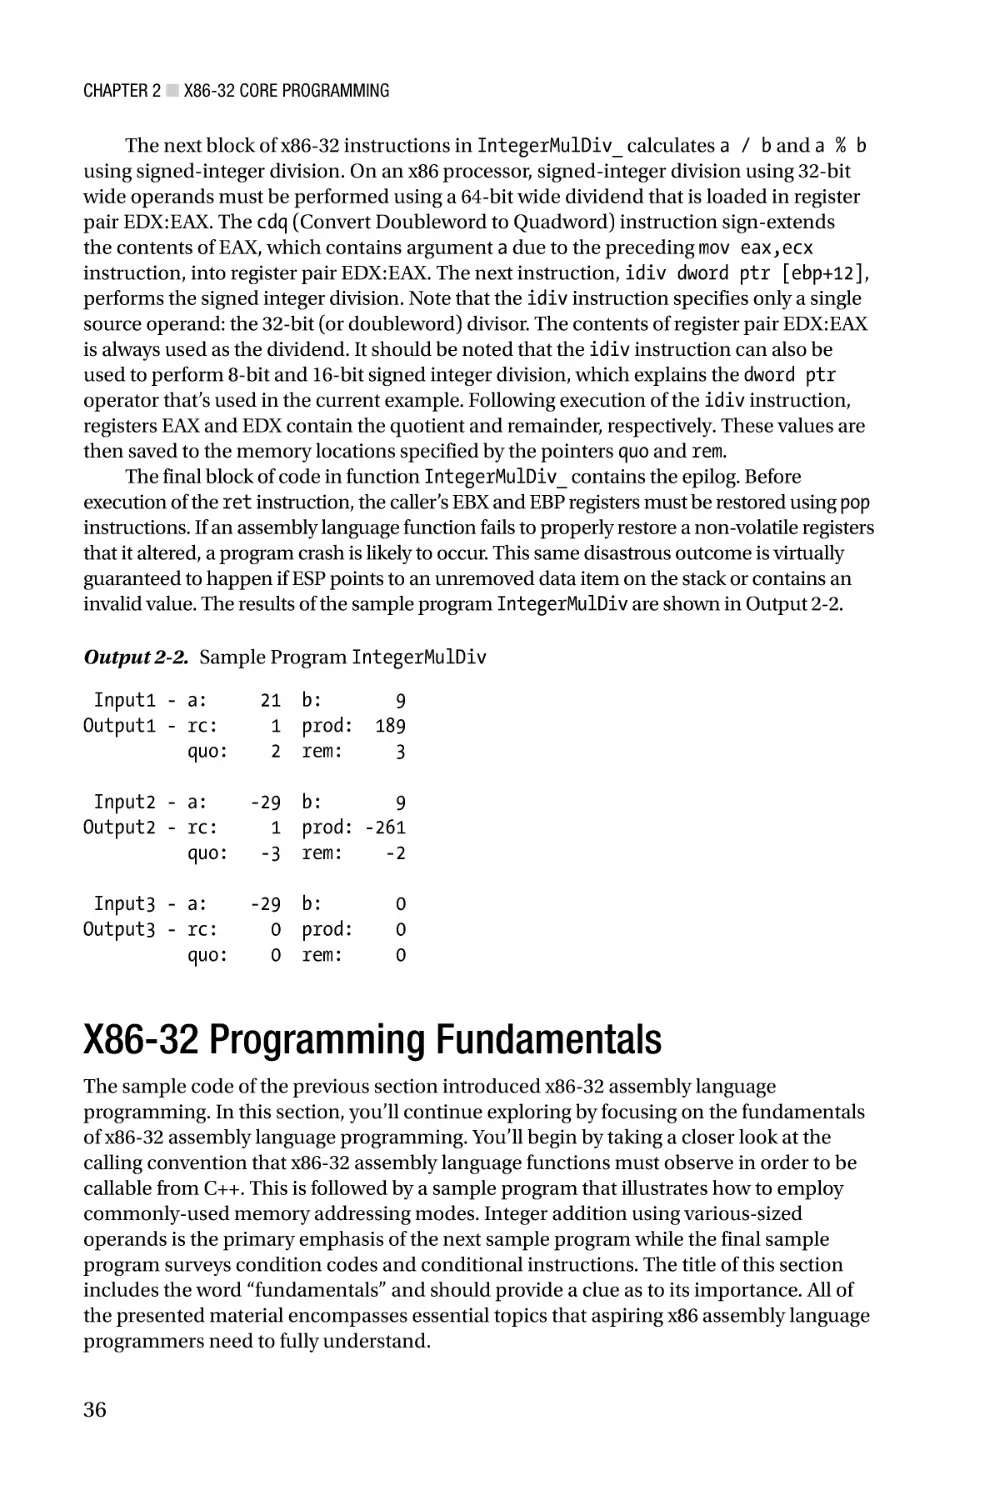 X86-32 Programming Fundamentals